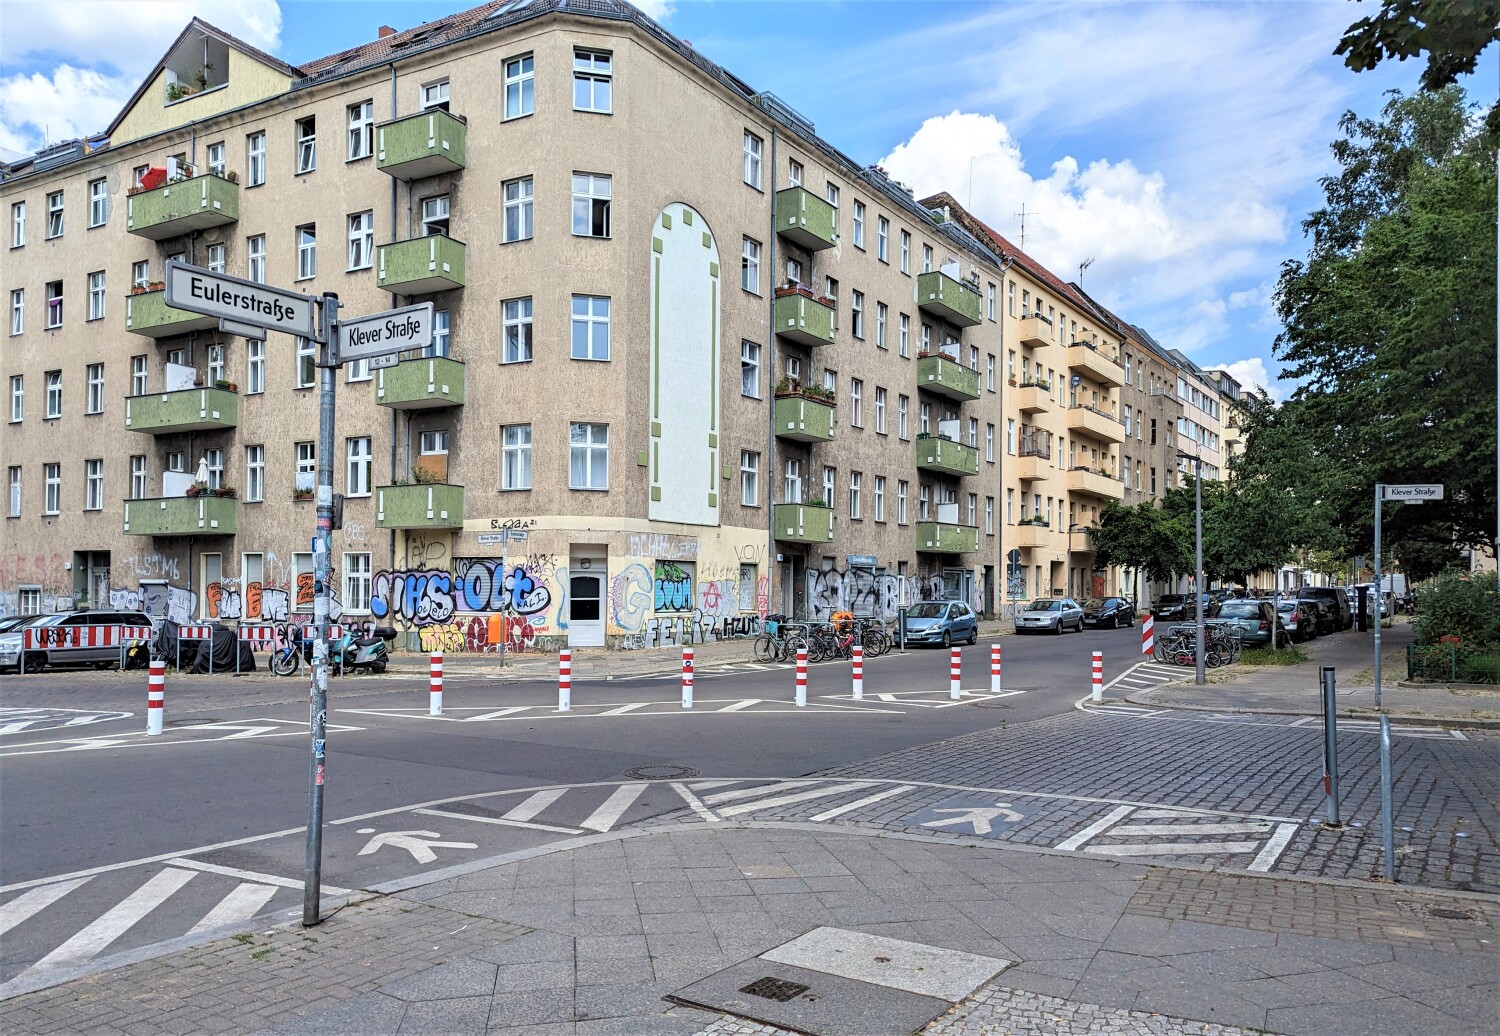 Kiezblock Bellermannkiez: Modalfilter an der Kreuzung Klever Straße / Eulerstraße